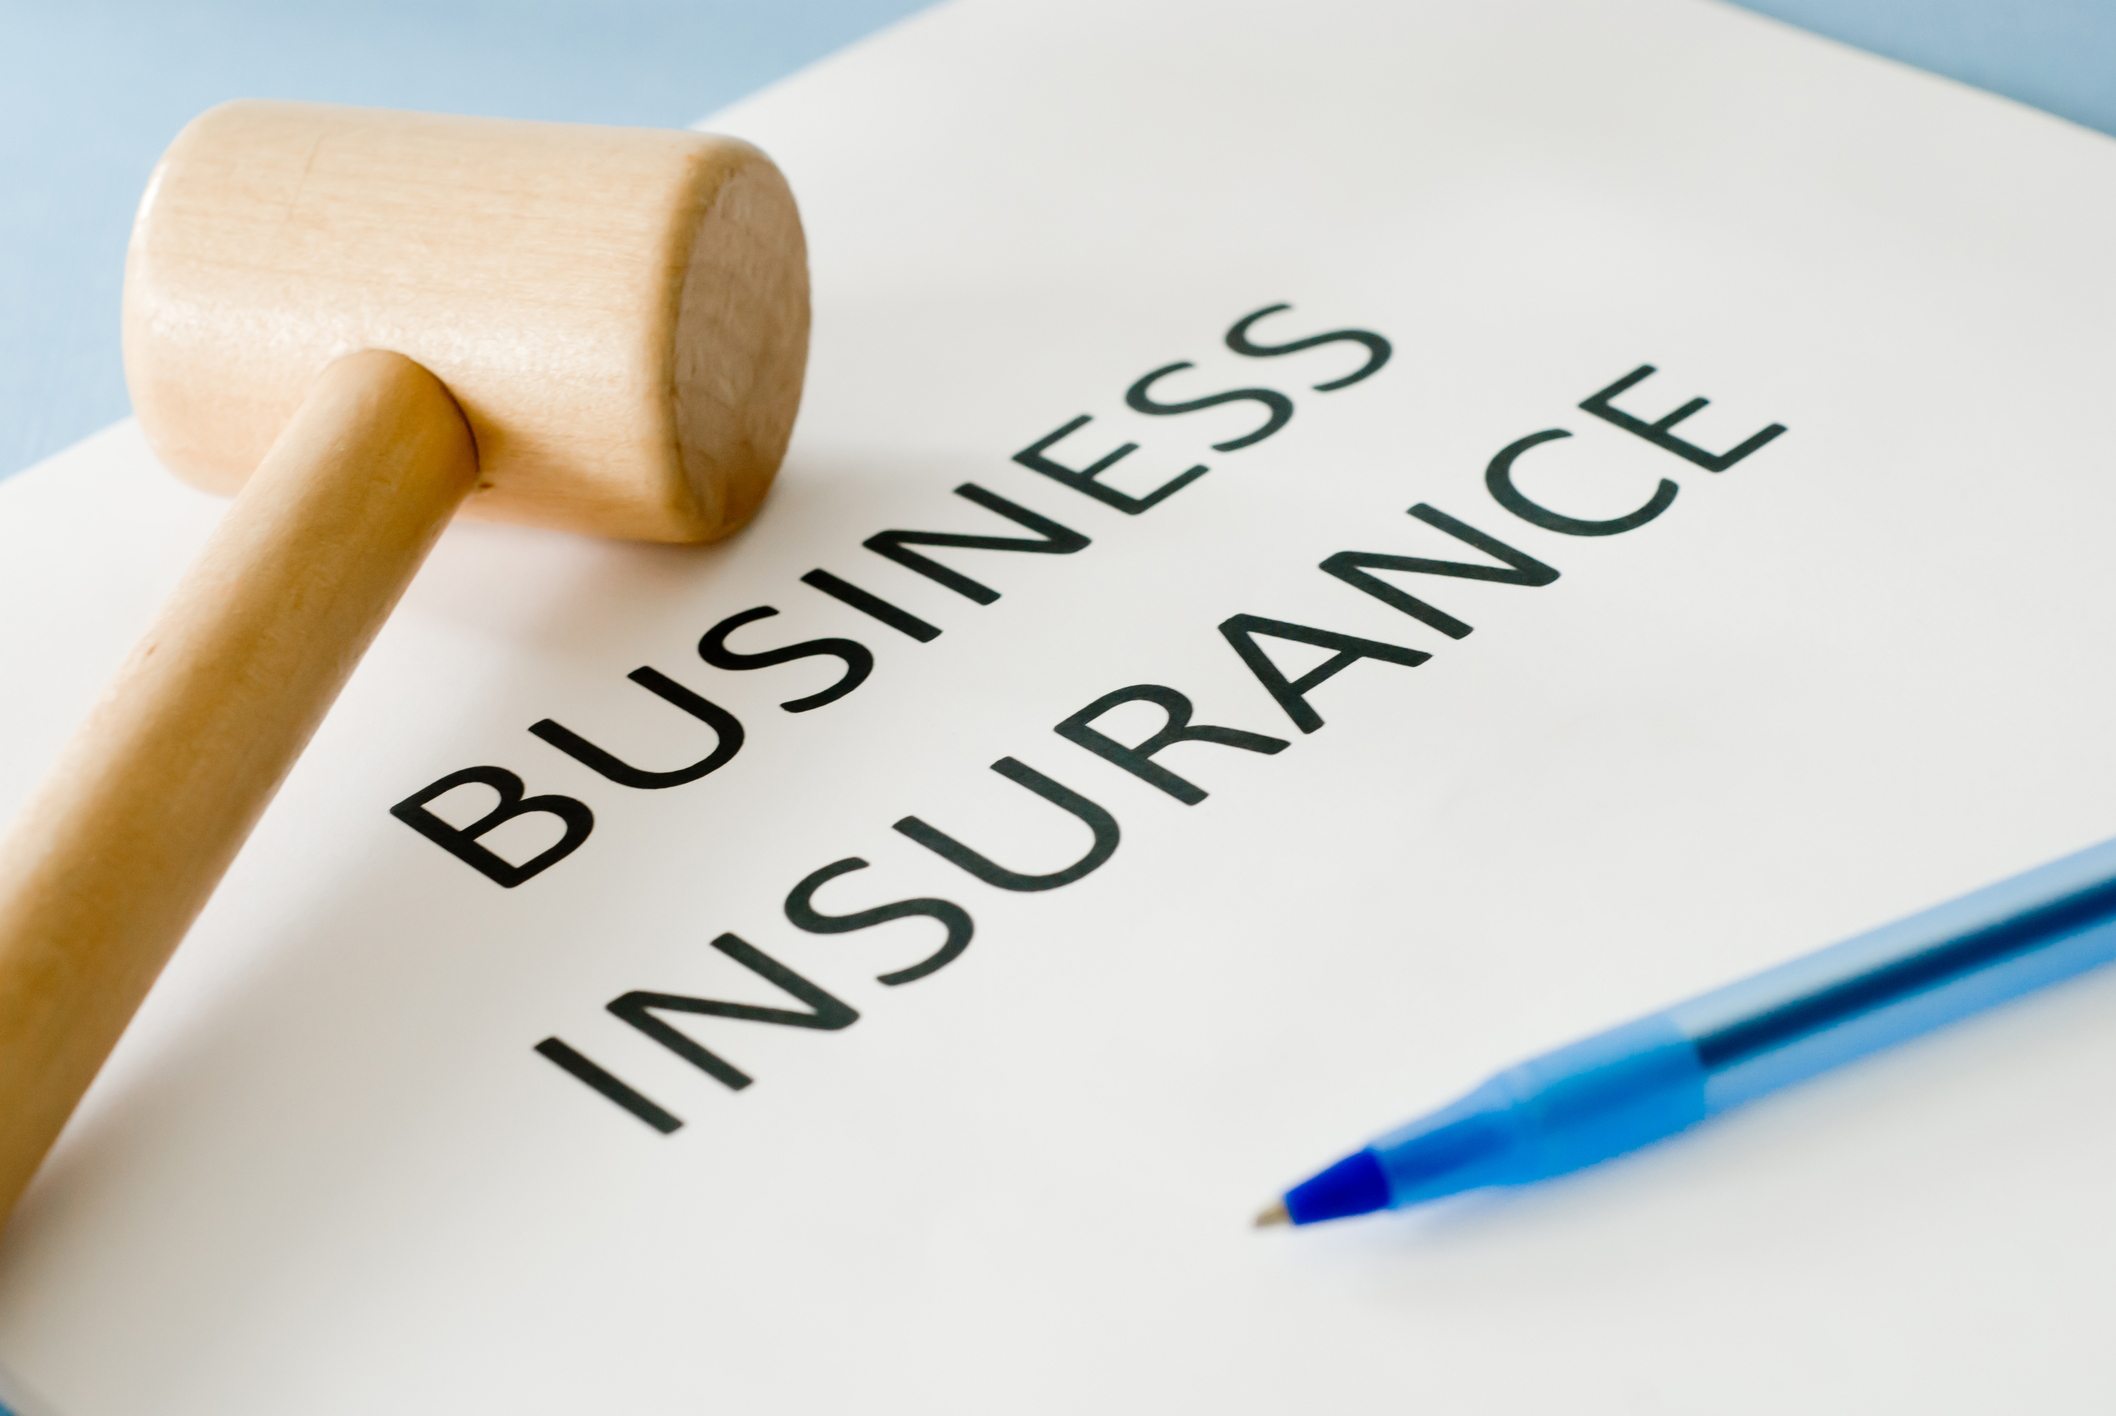 Business Insurance Can't Wait - Business Insurance